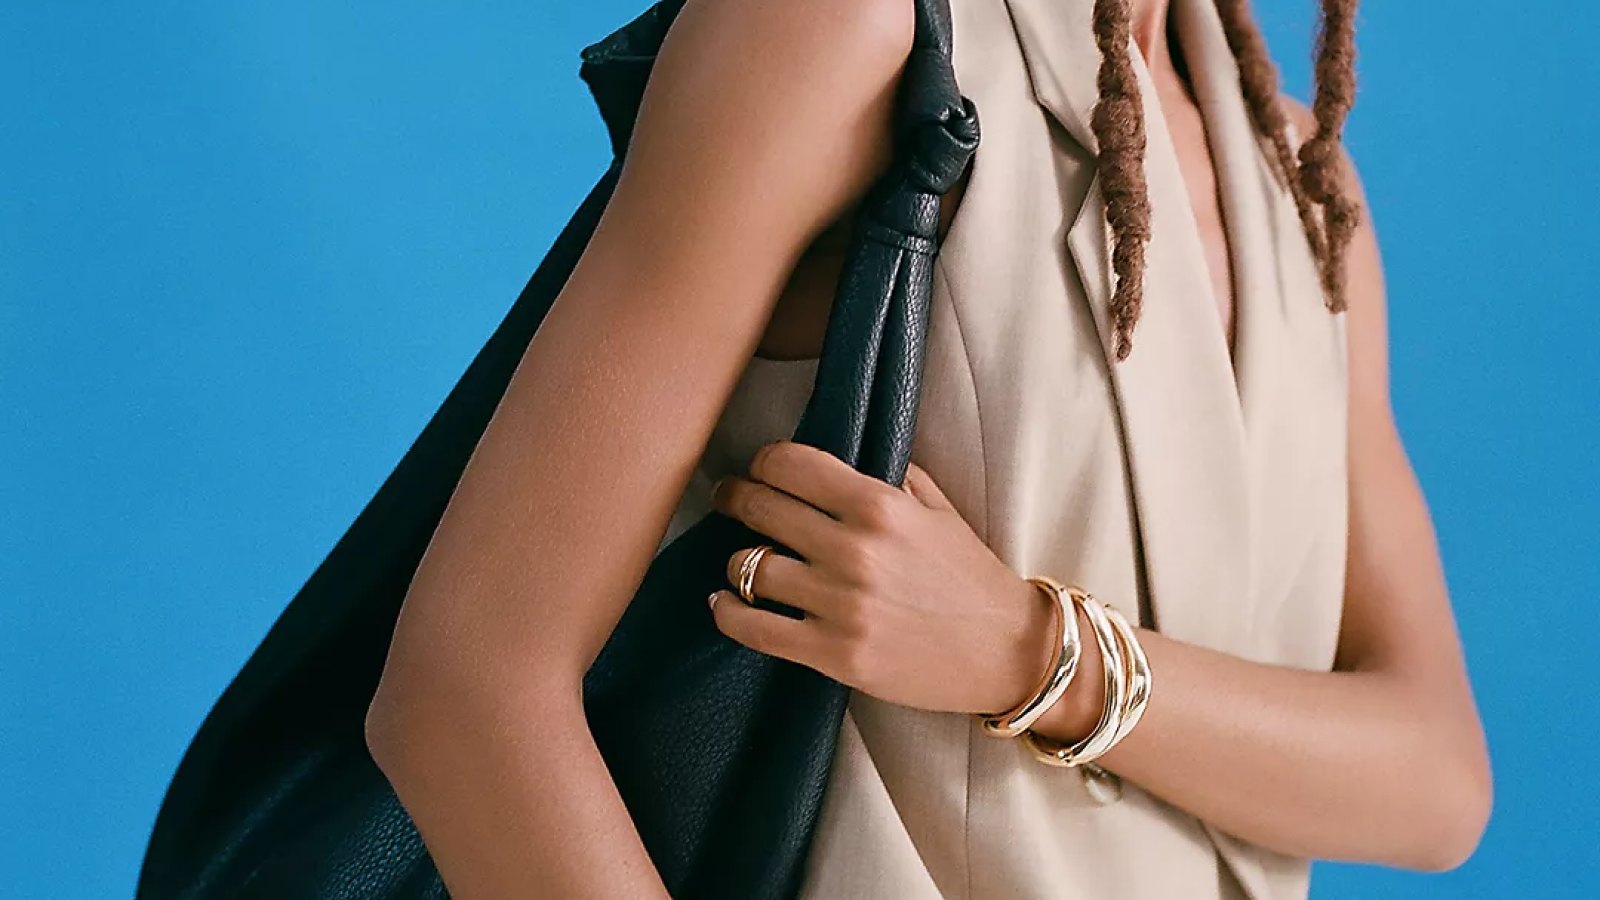 Fashion Woven Purse for Women Top-handle Shoulder Bag Soft Summer Hobo Tote  Bag